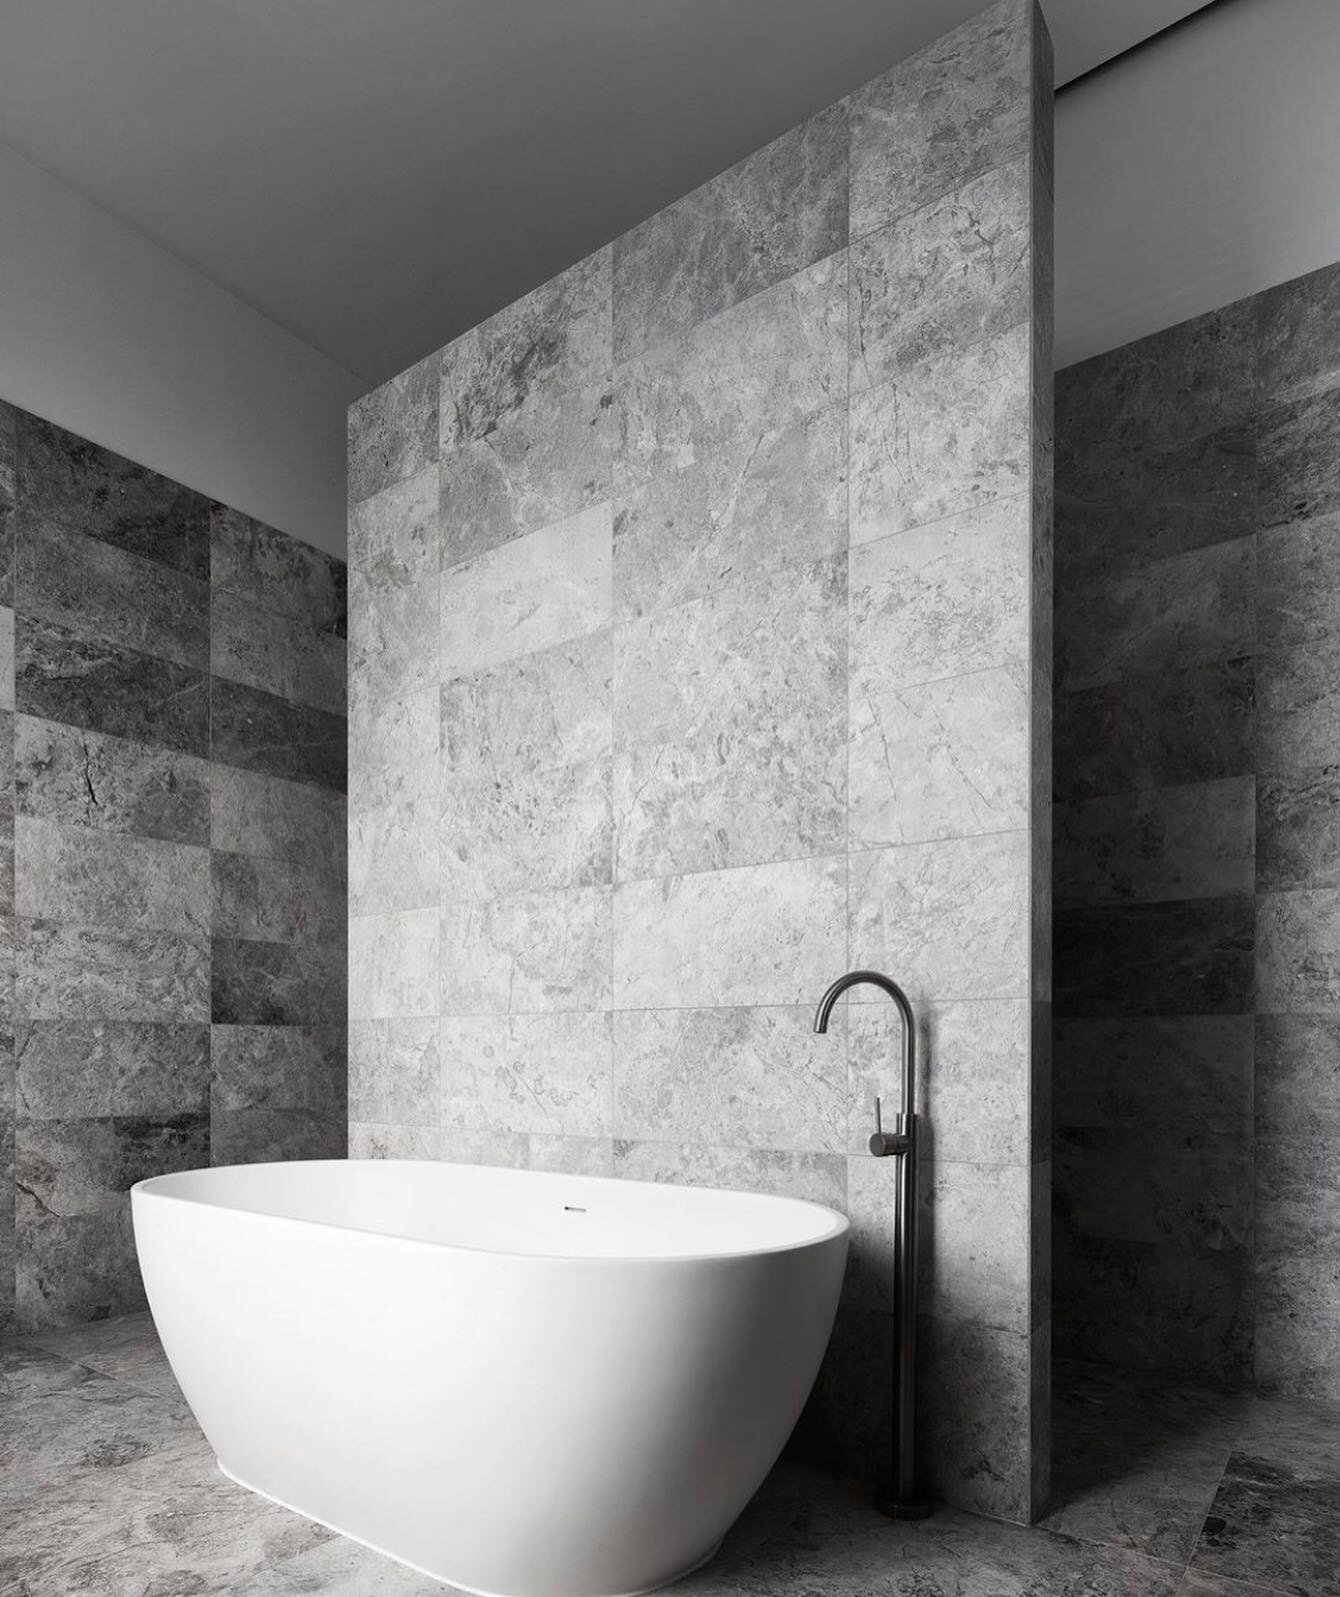 East Melbourne Project ~ Main Bathroom
Tundra Grey Honed Stone Tiles